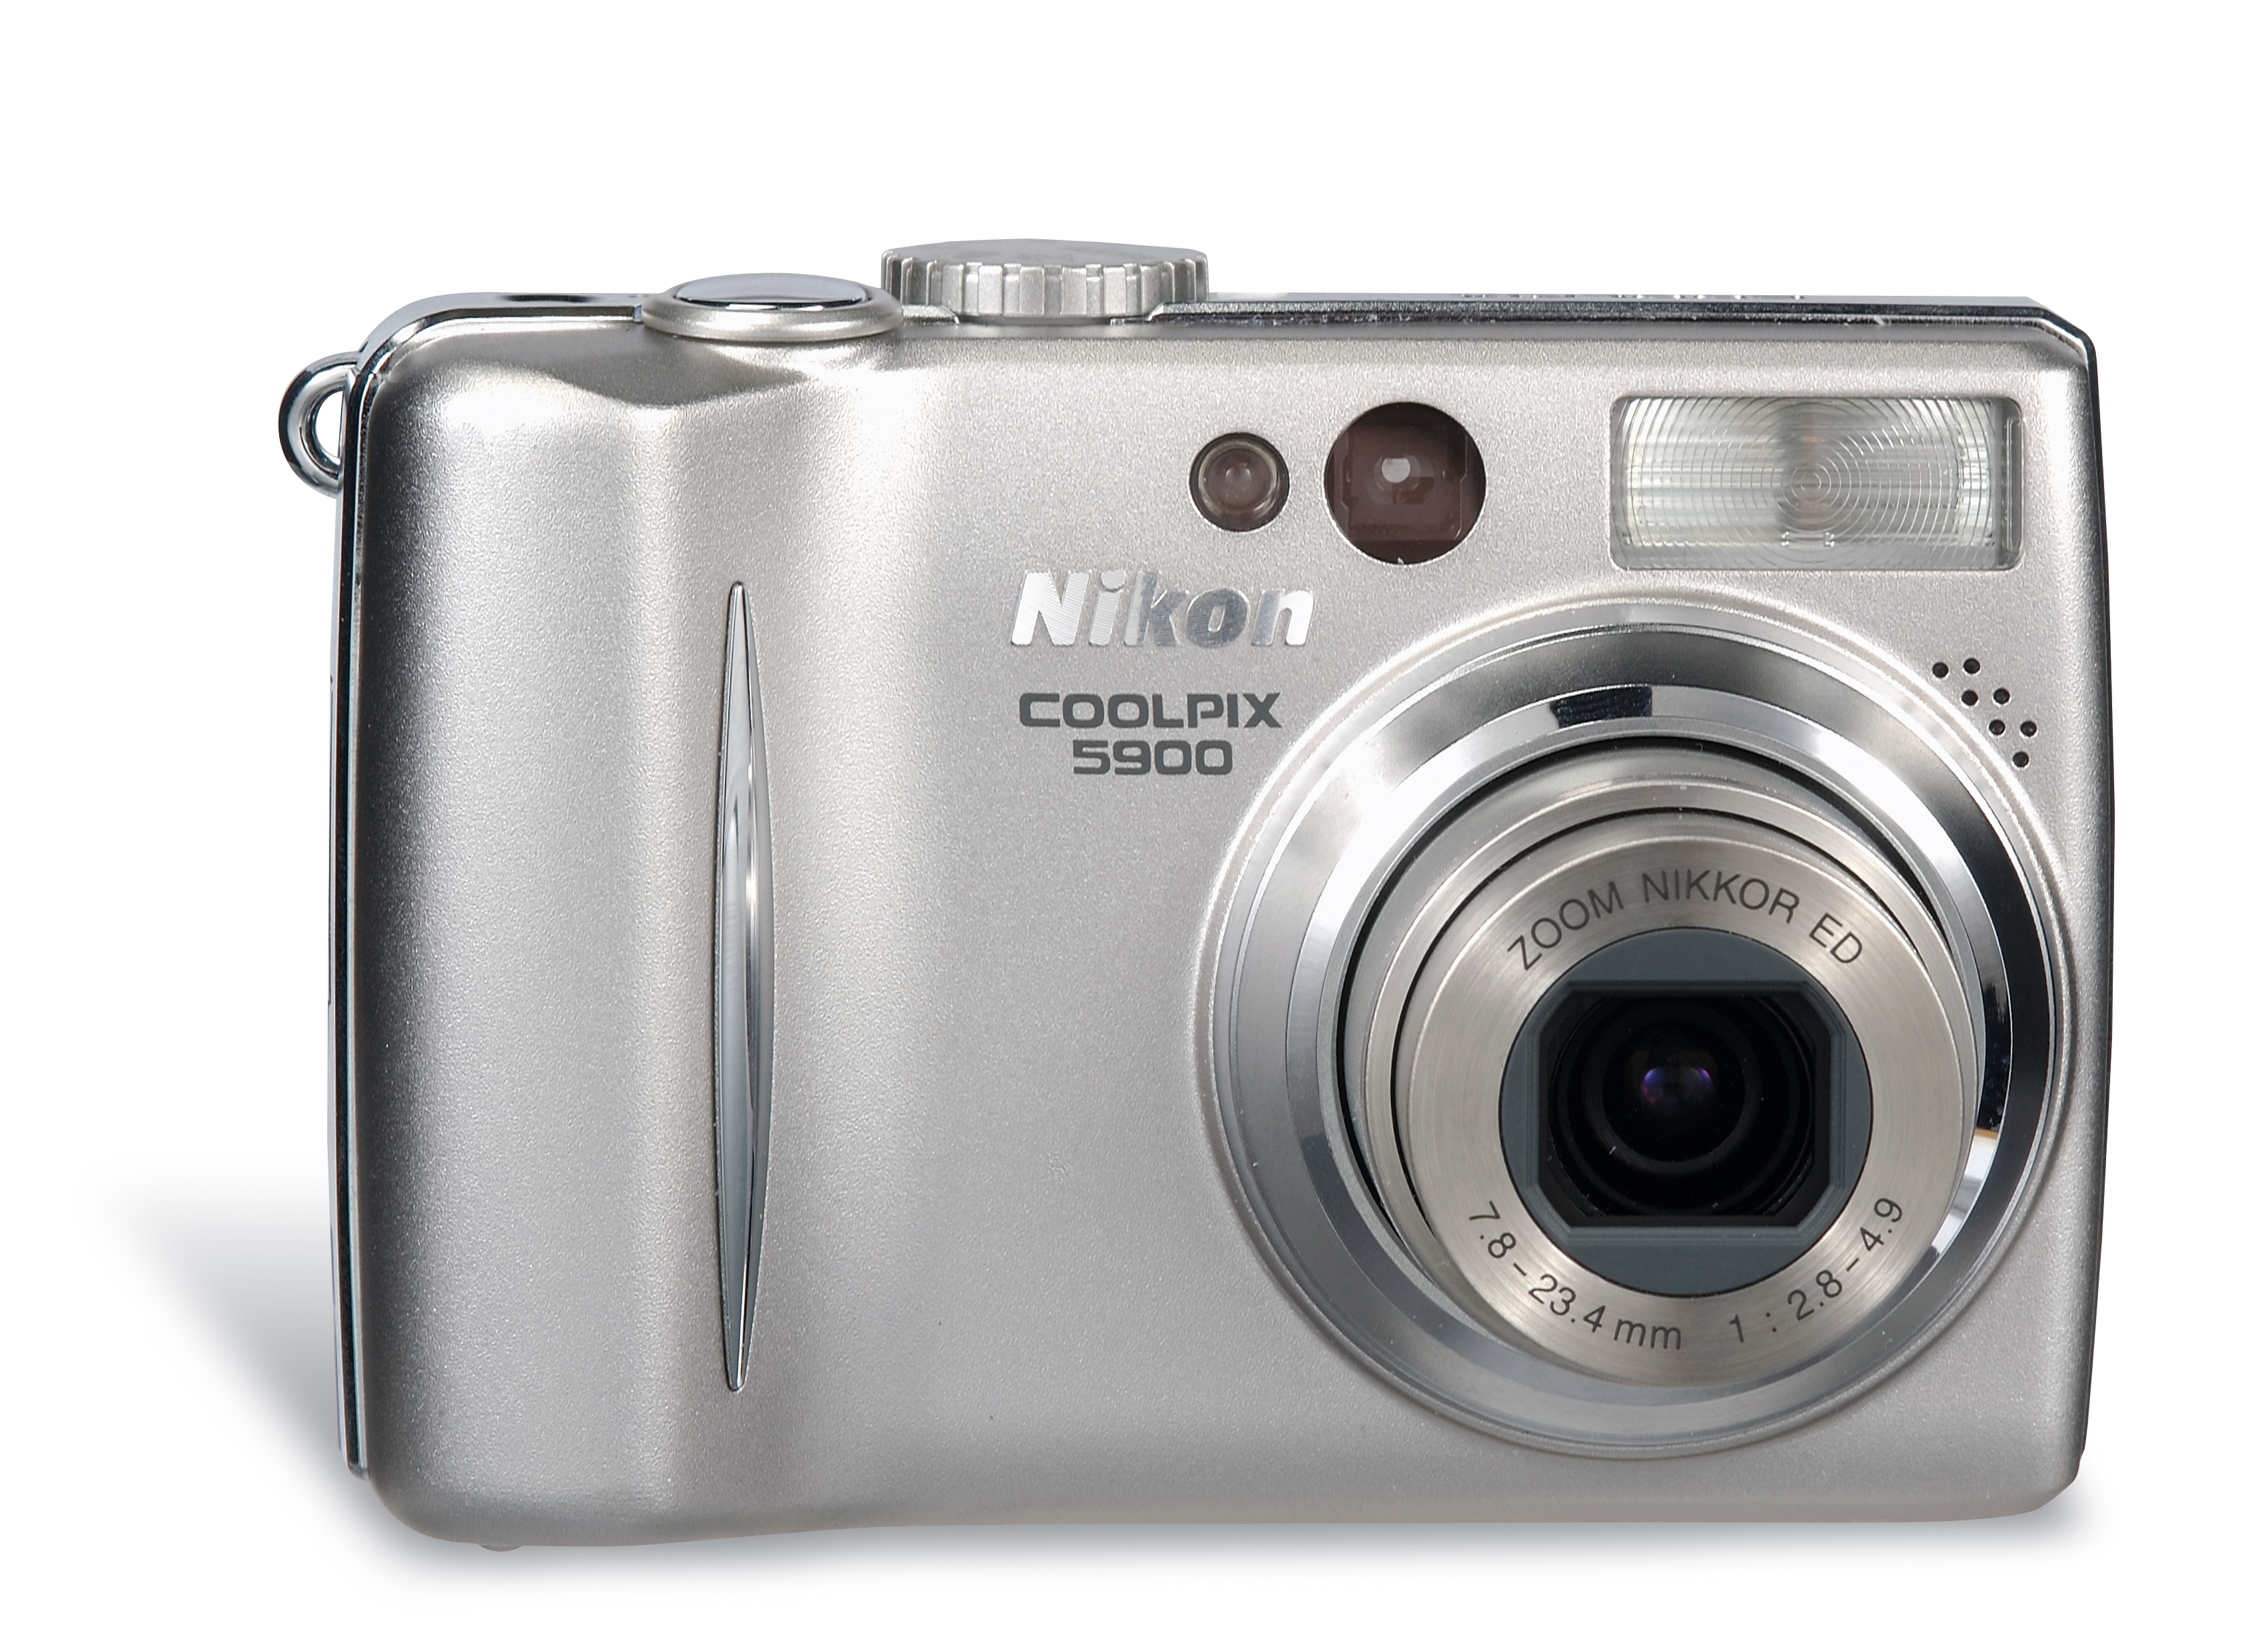 Nikon Coolpix 5900 review | TechRadar